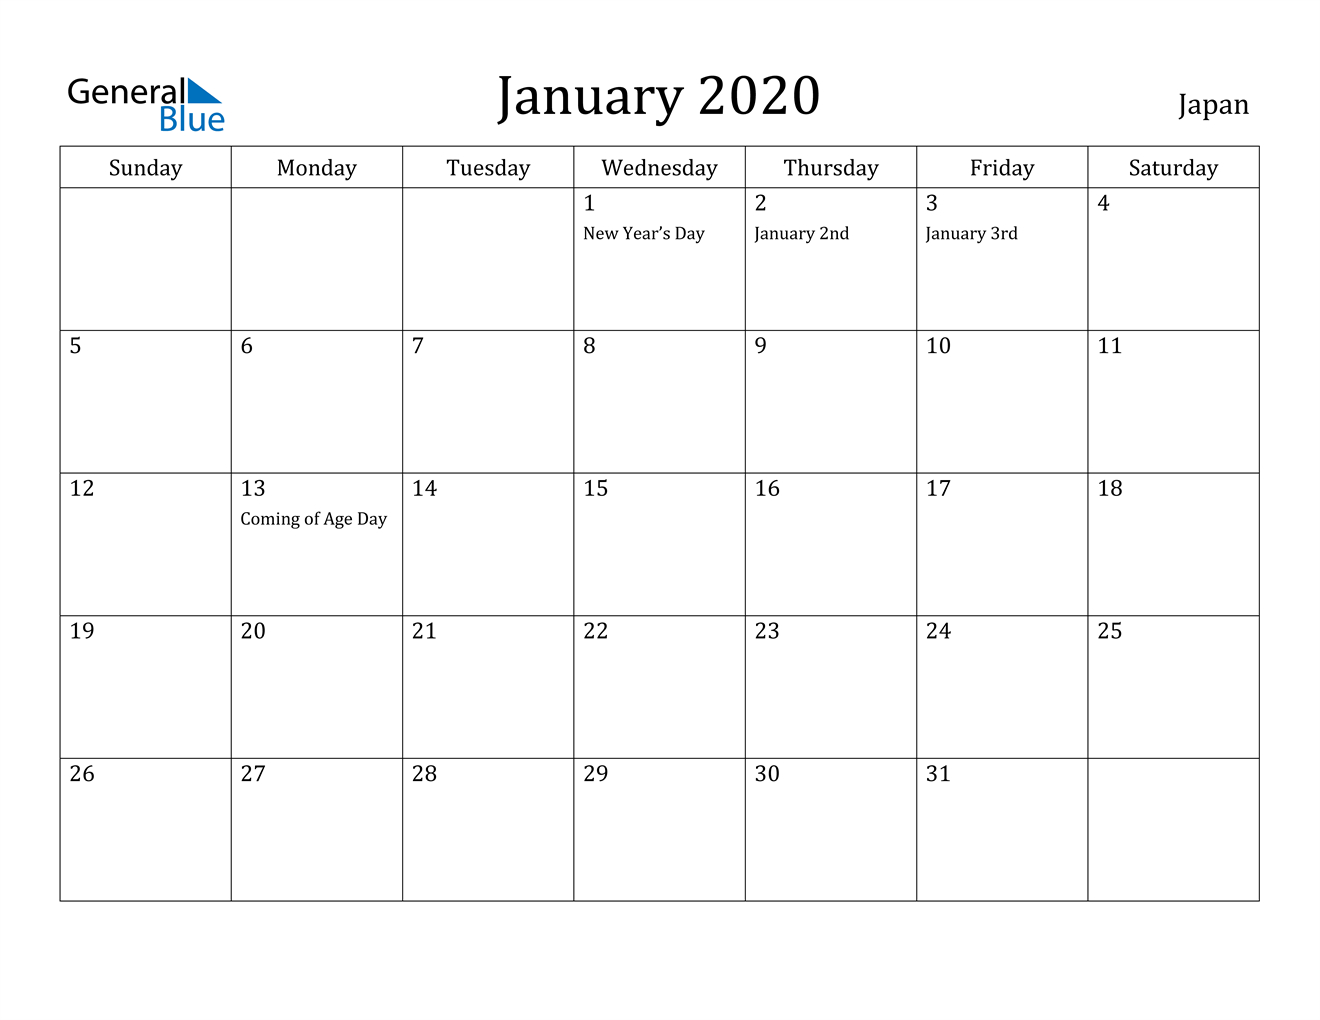 January 2020 Calendar - Japan